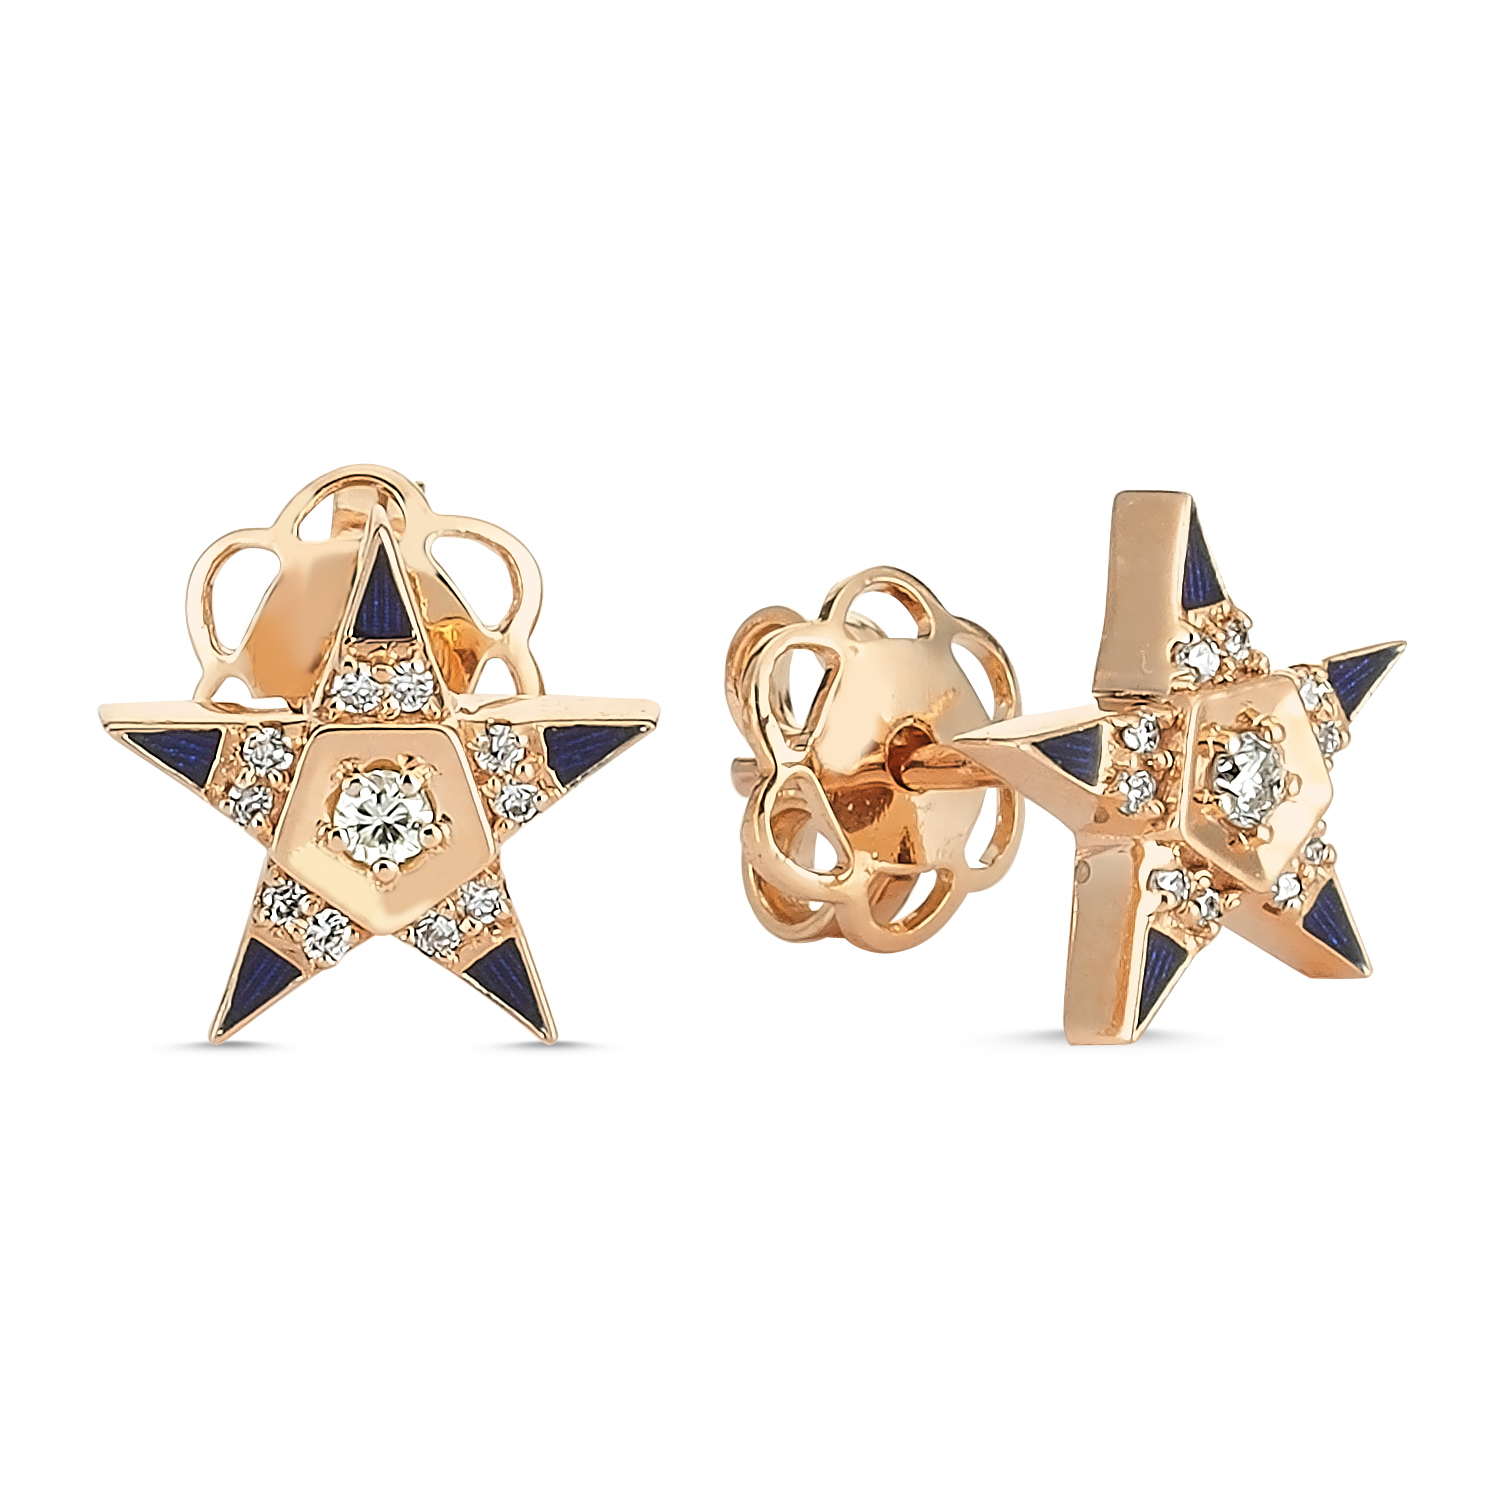 Brilliant Diamond and Enamel Star Earrings